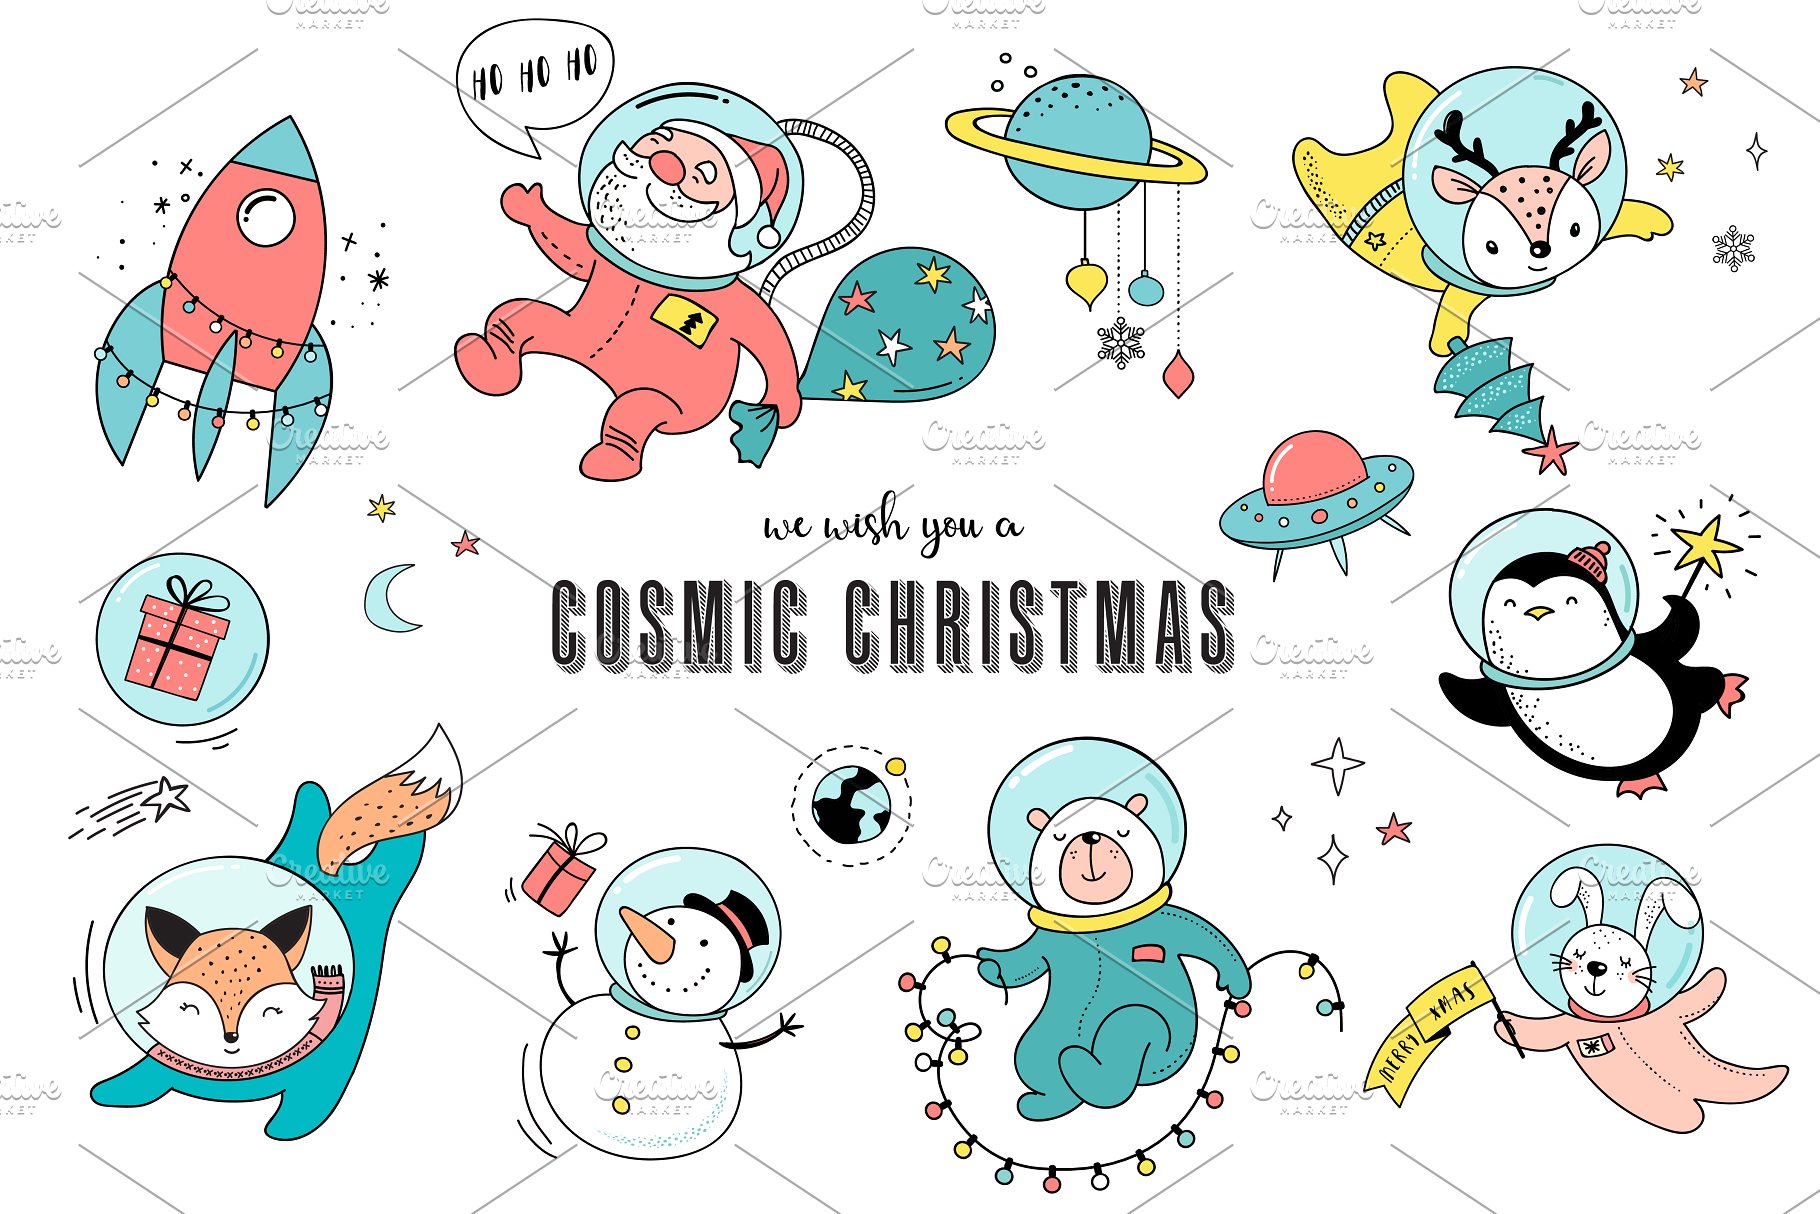 外太空宇宙圣诞节手绘插画素材 Cosmic Christmas in outer space插图1